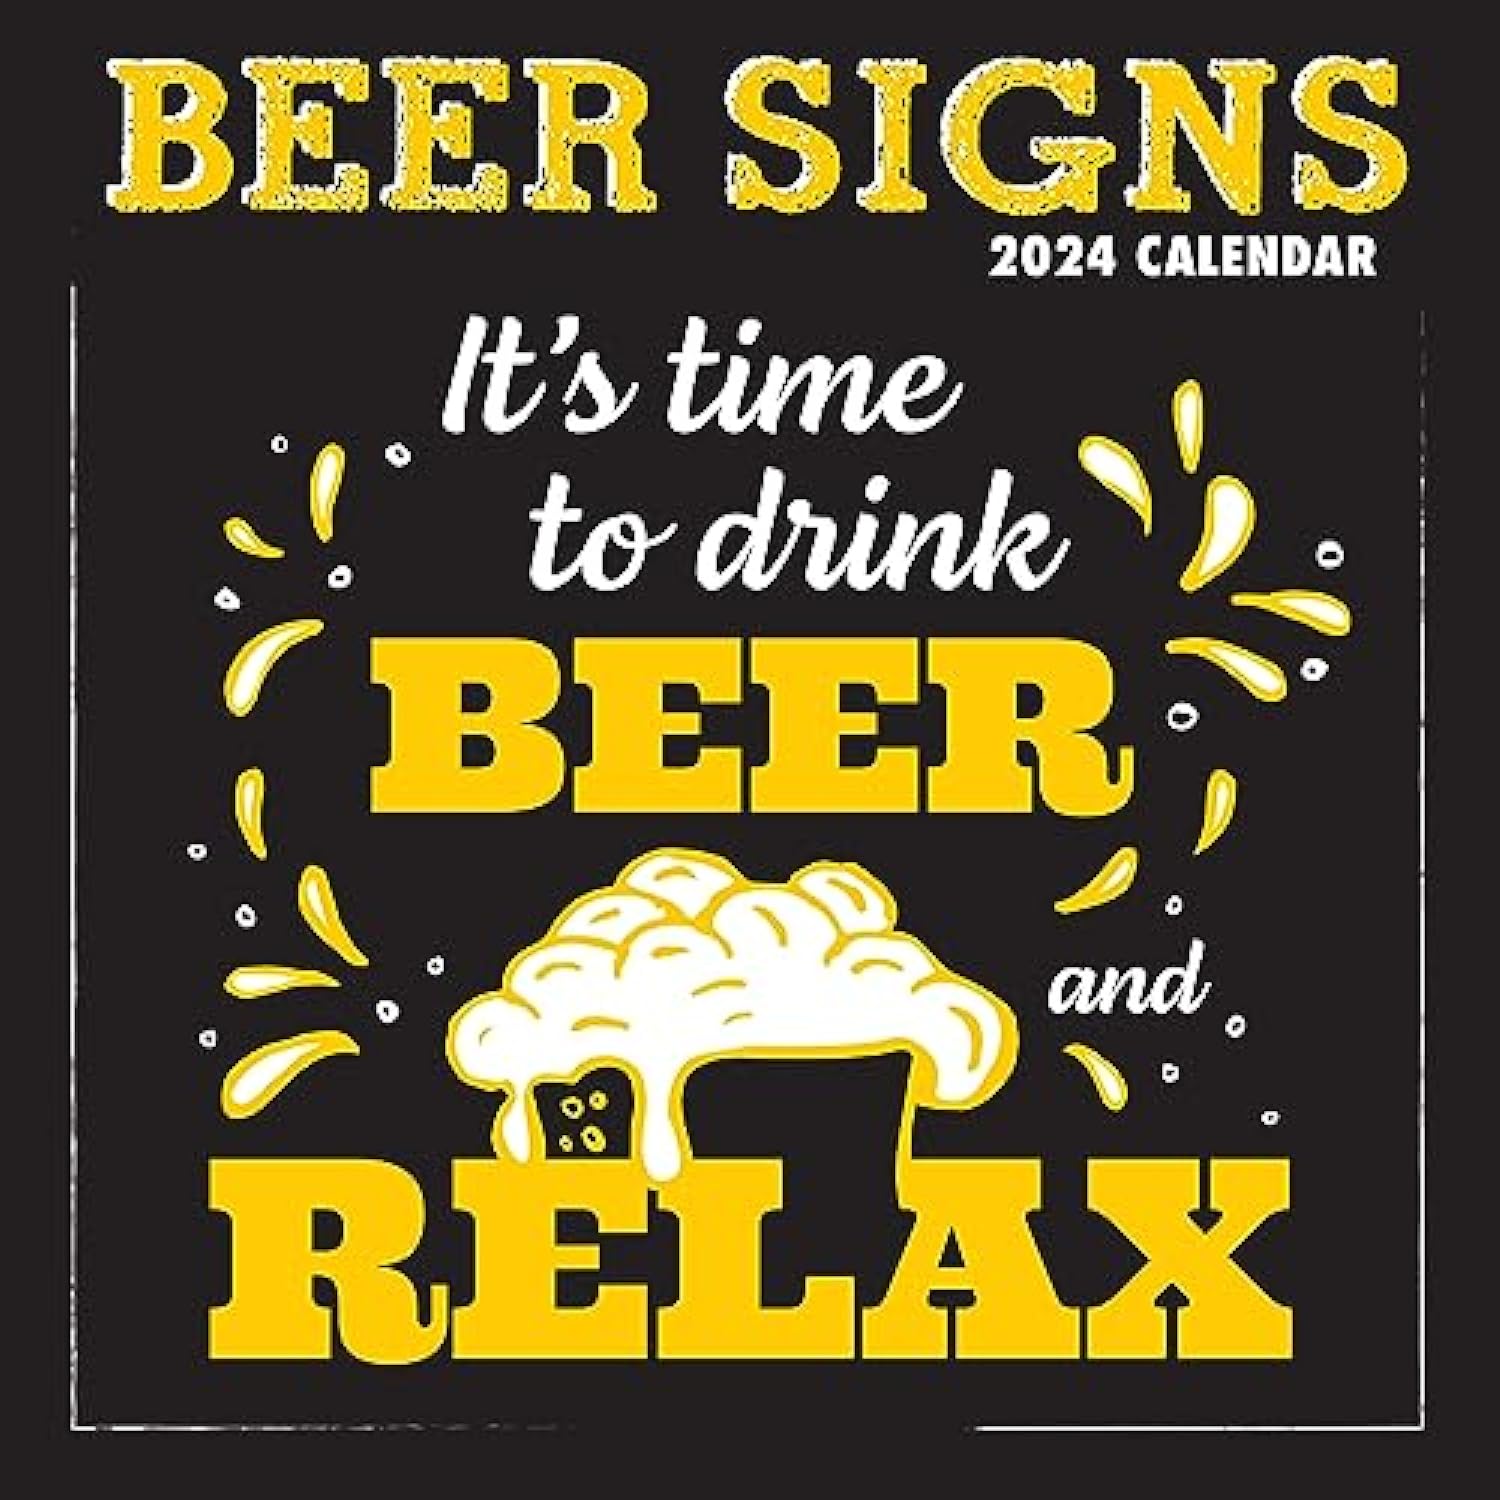 Beer Signs 2024 Wall Calendar